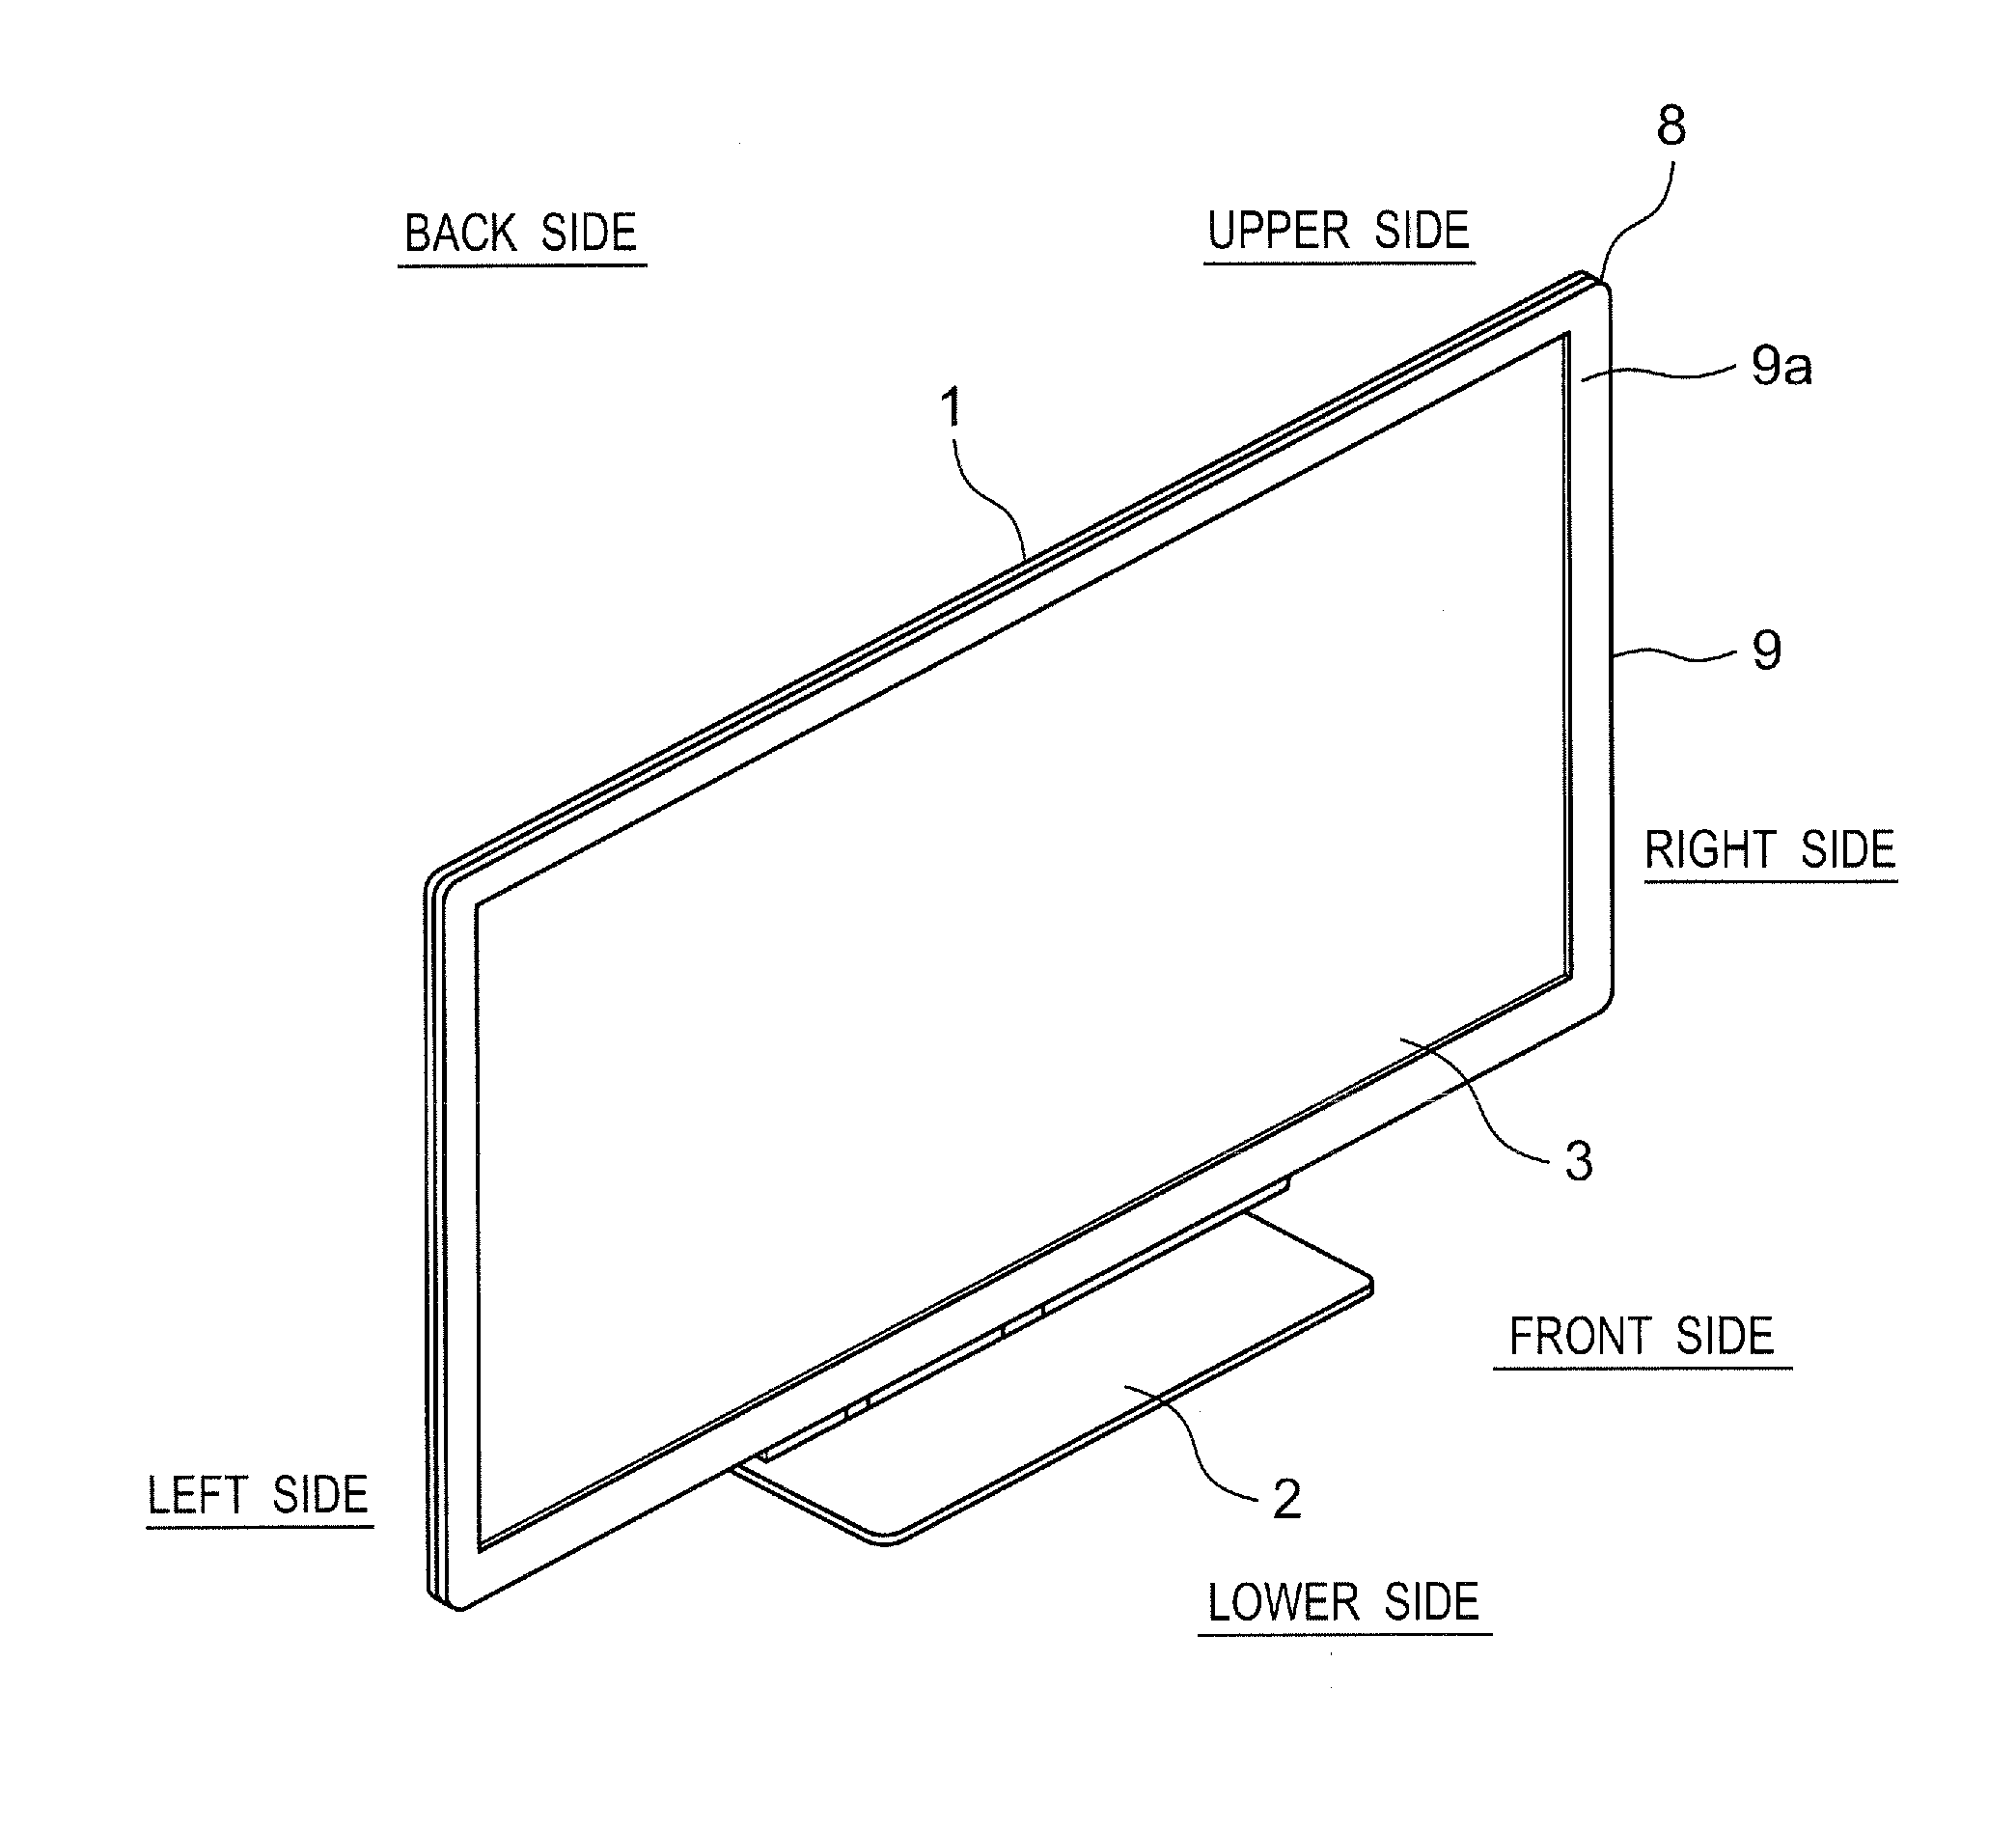 Thin display device